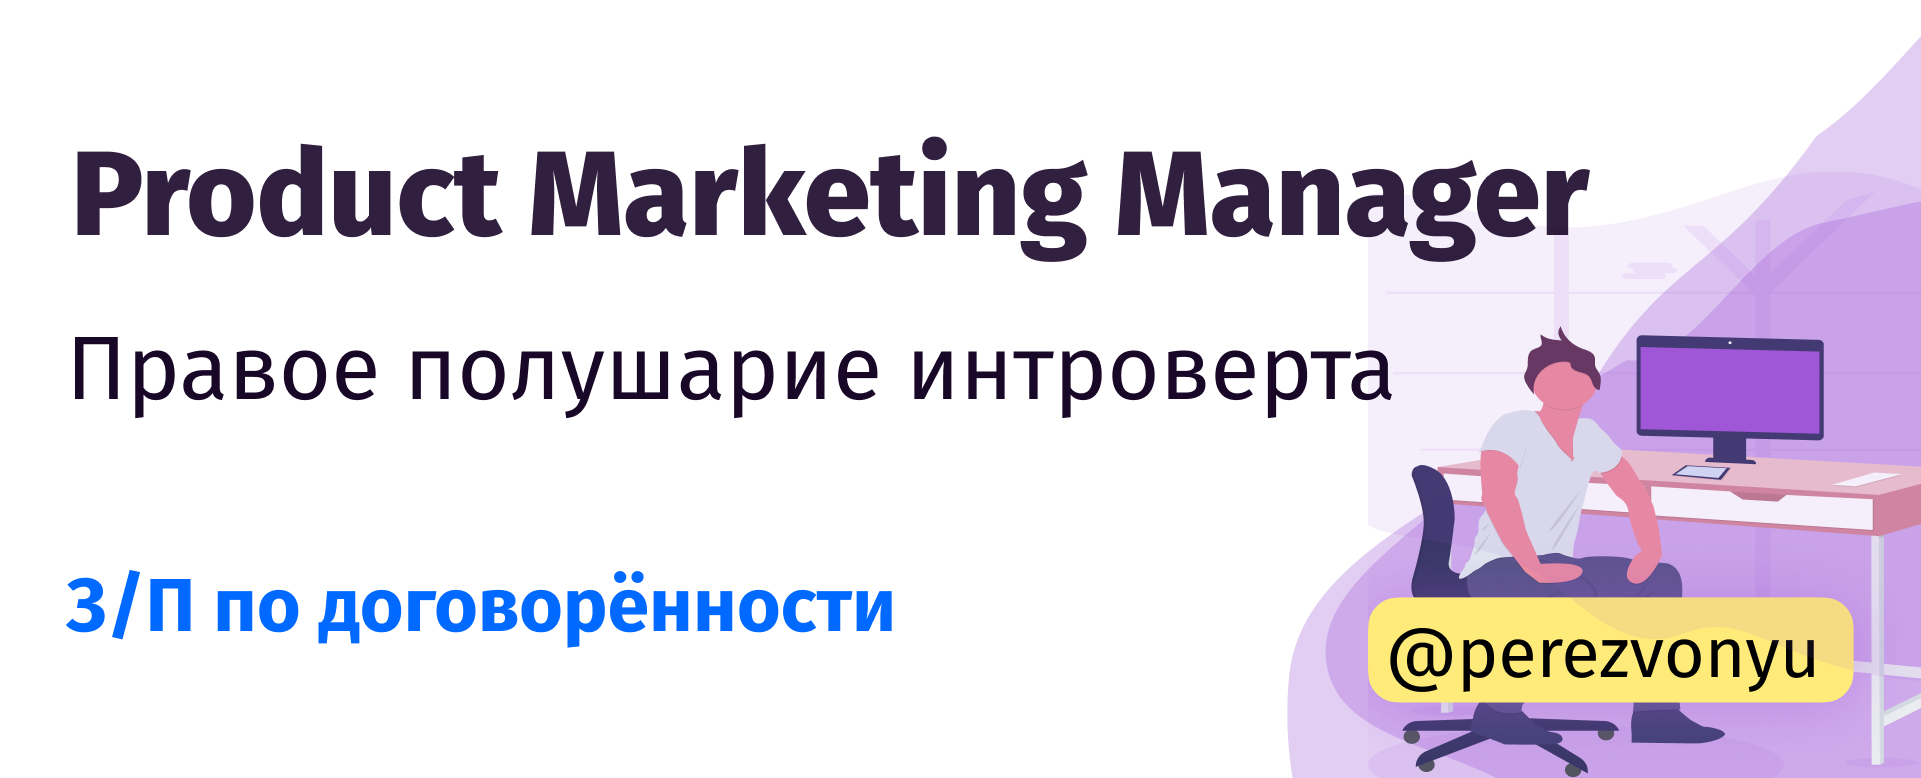 Product вакансии. Продакт менеджеры в маркетинге. Product marketing Manager.